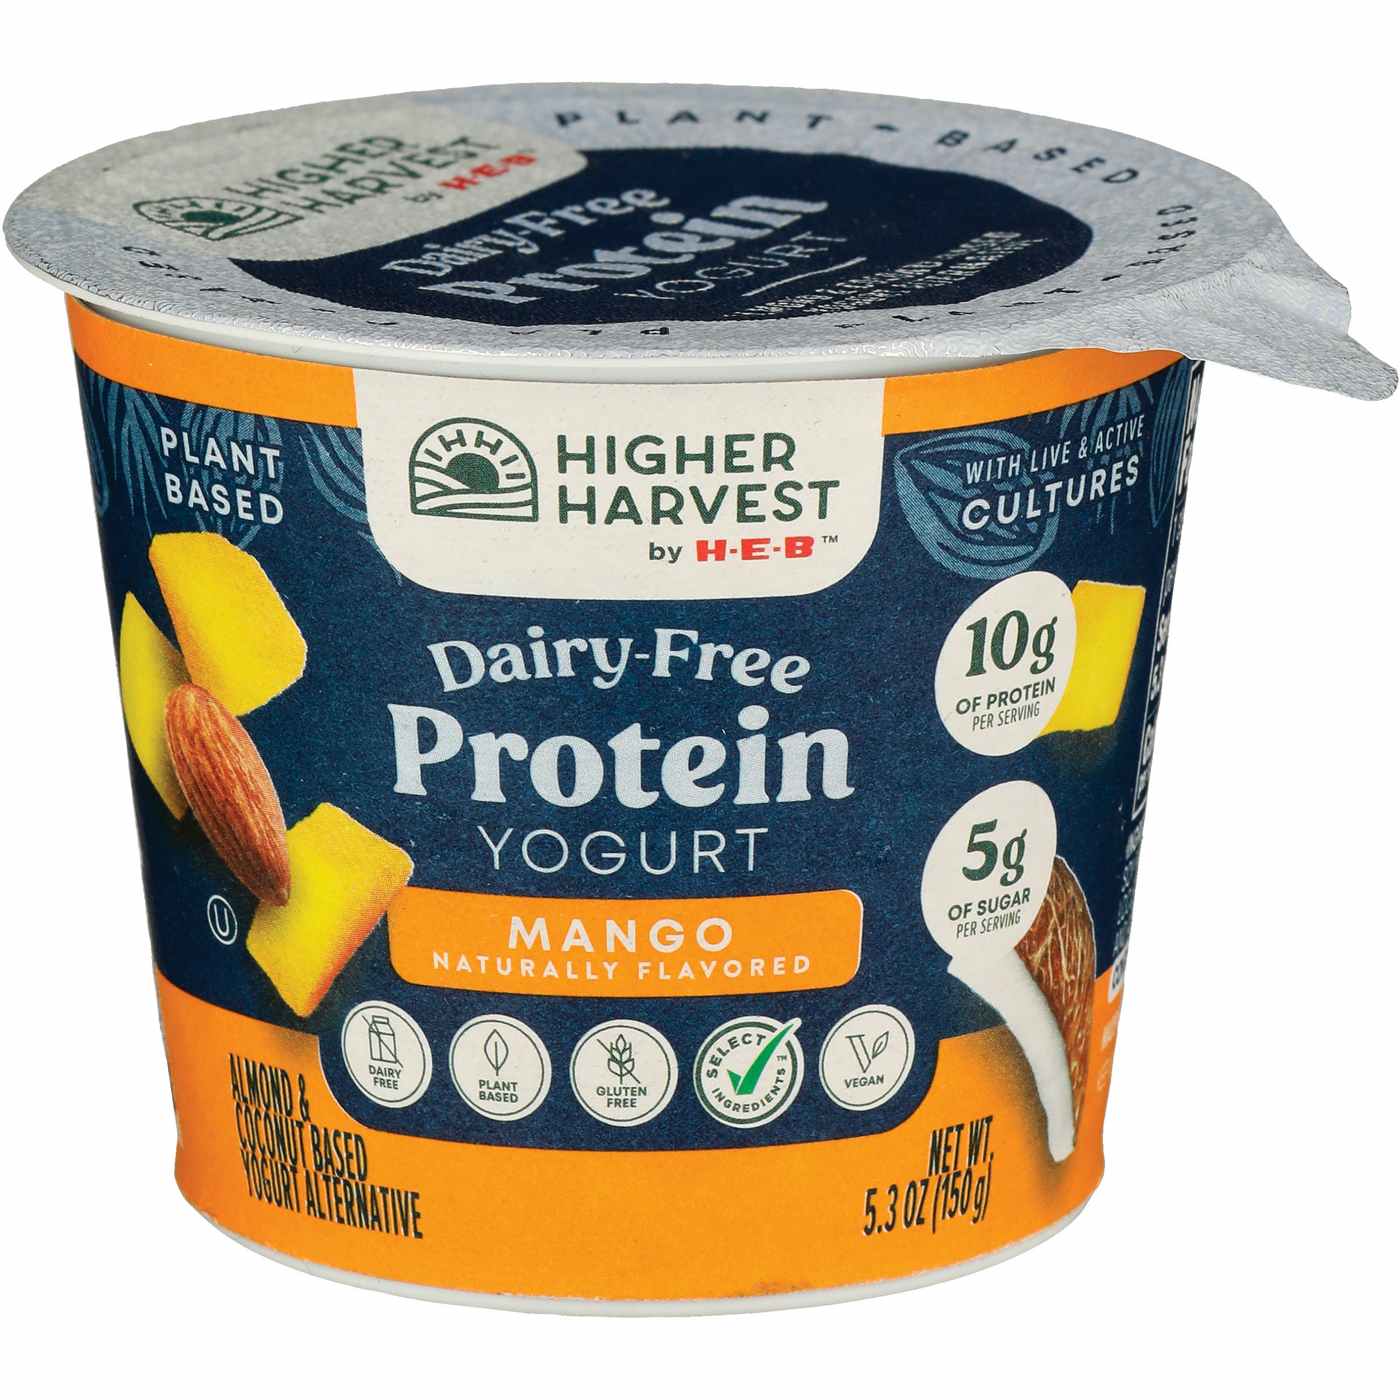 Higher Harvest by H-E-B Dairy-Free 10g Protein Yogurt – Mango; image 3 of 3